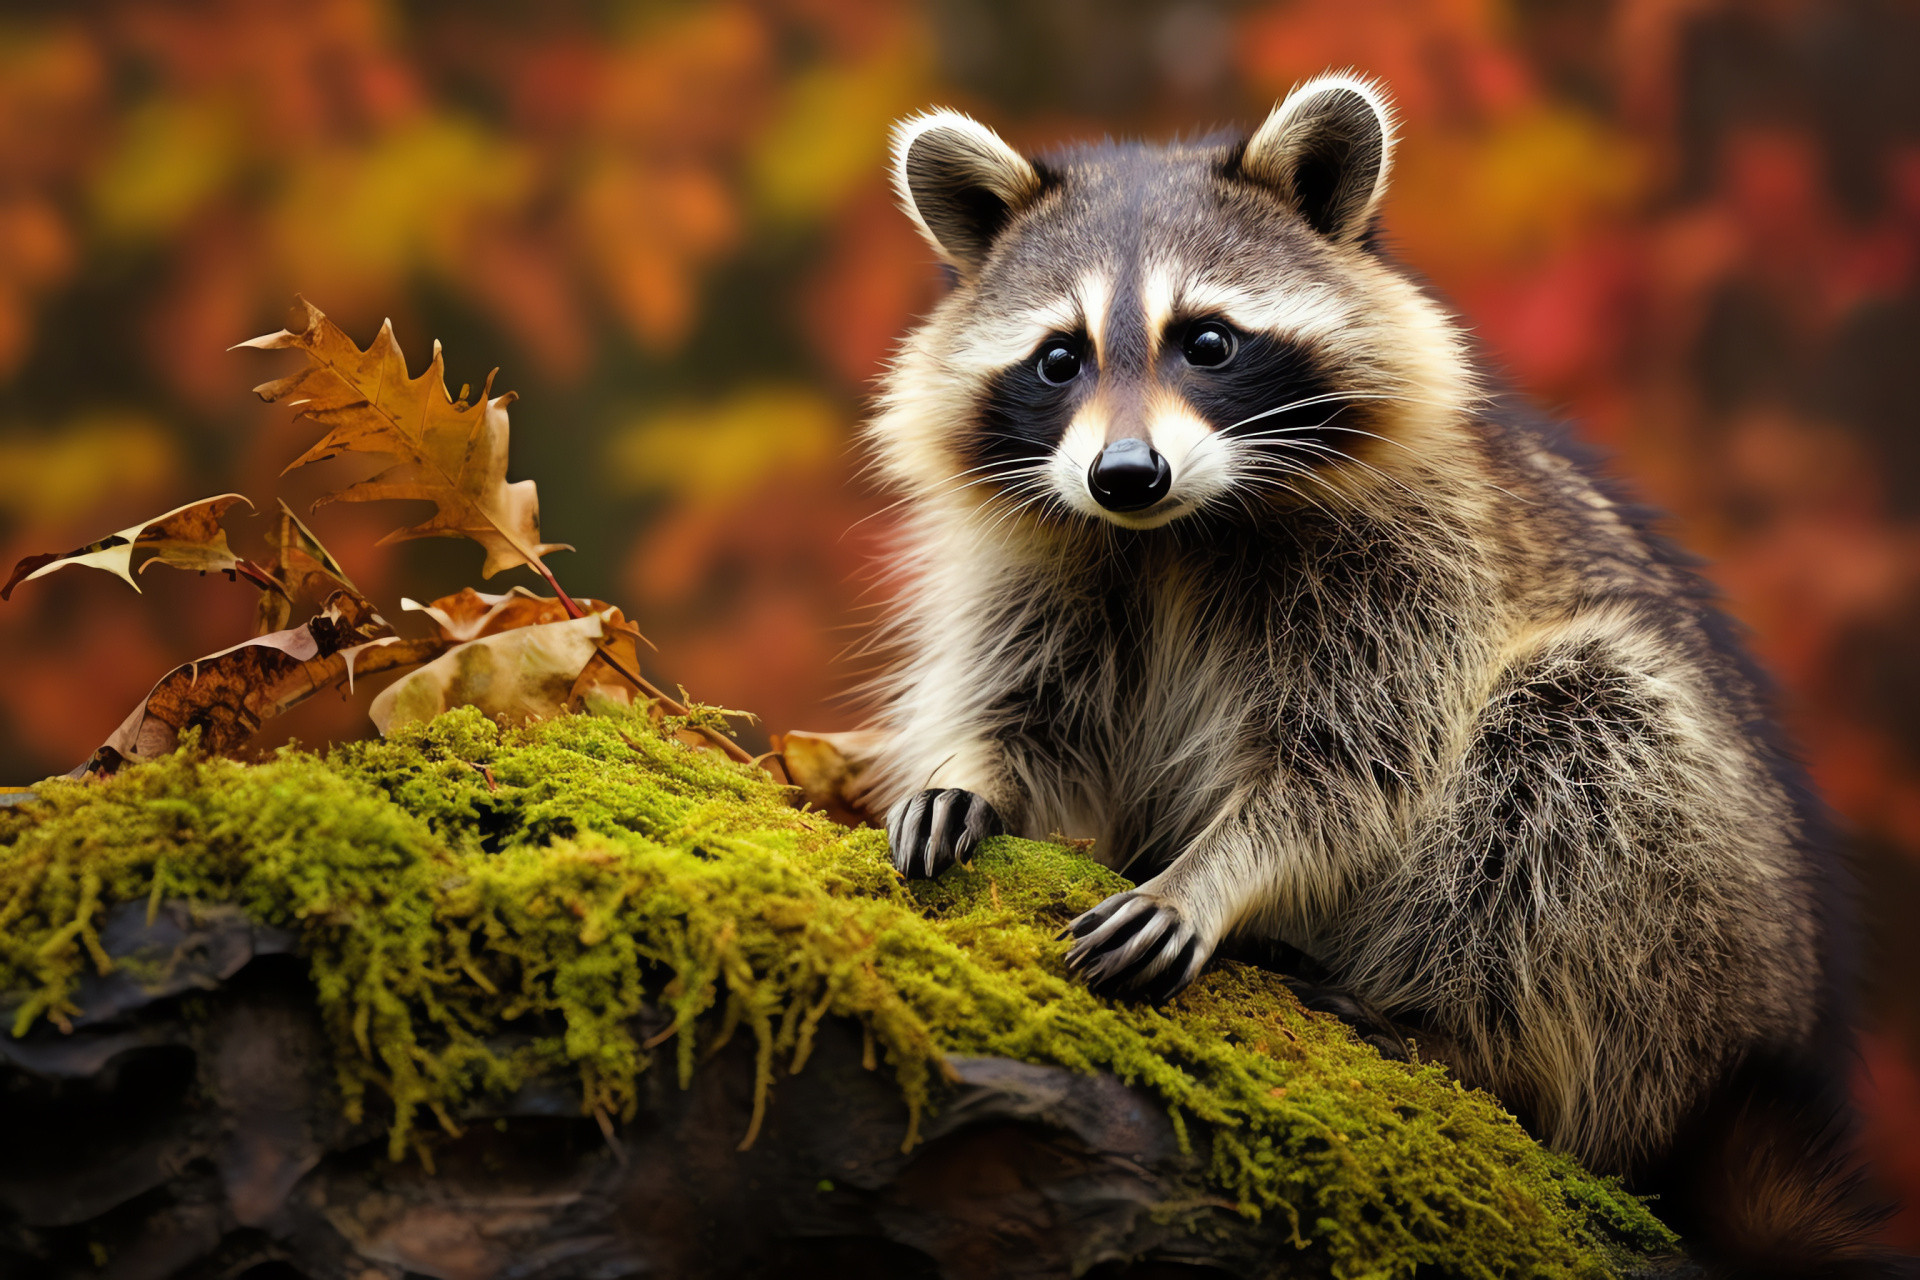 Raccoon, woodland creature, animal dexterity, trash foraging, habitat adaptation, HD Desktop Image